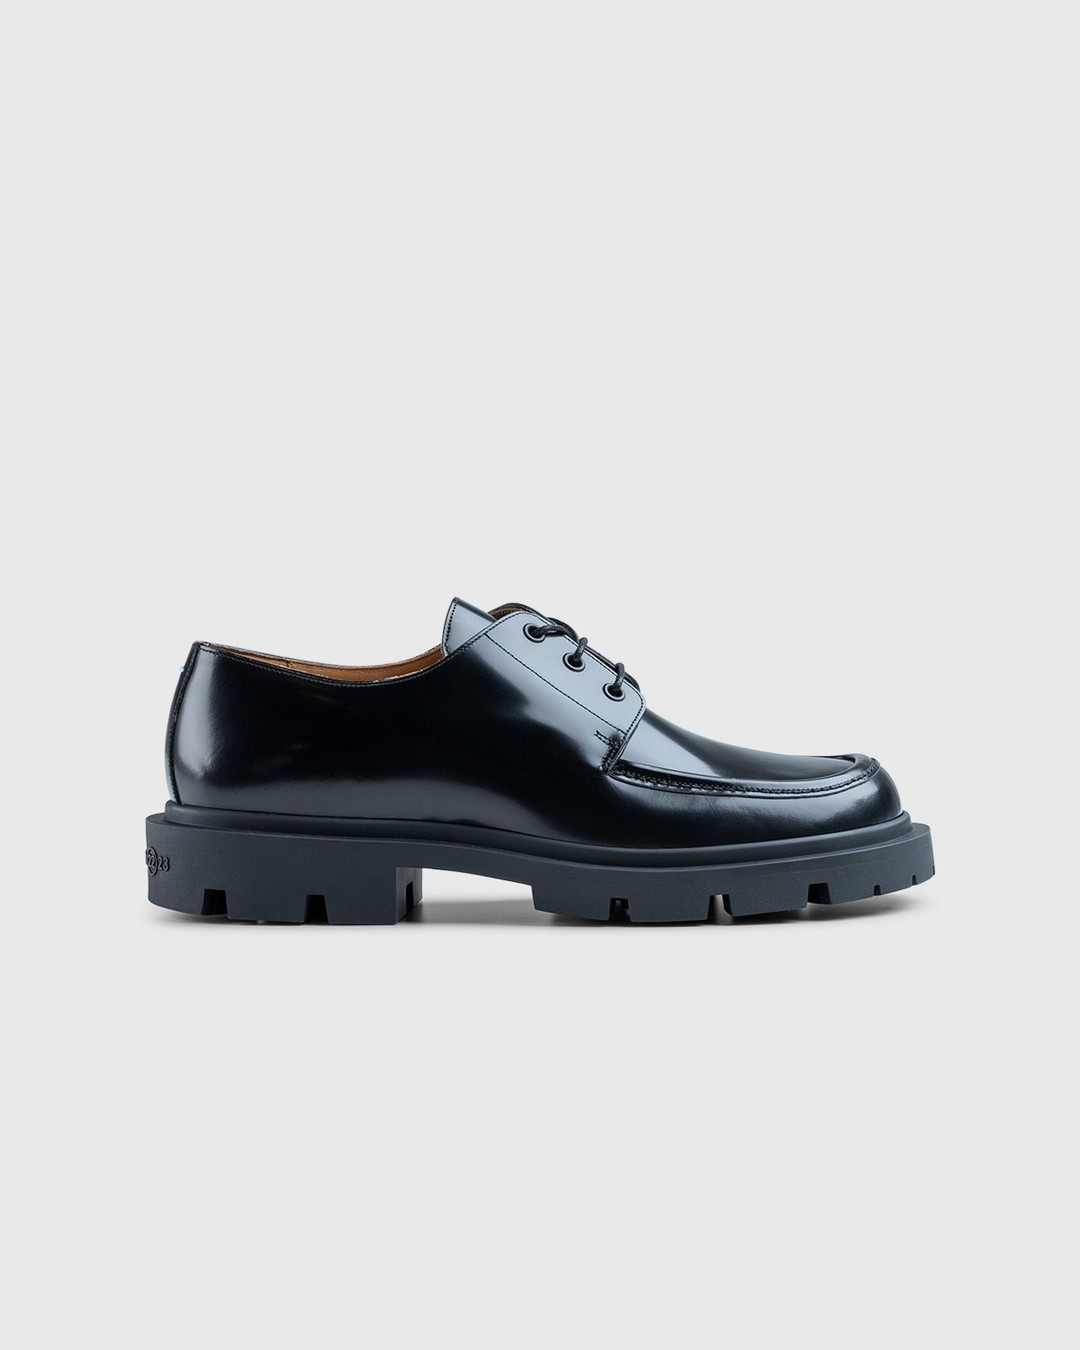 Maison Margiela – Cleated Sole Shoes Black - Oxfords & Lace Ups - Black - Image 1